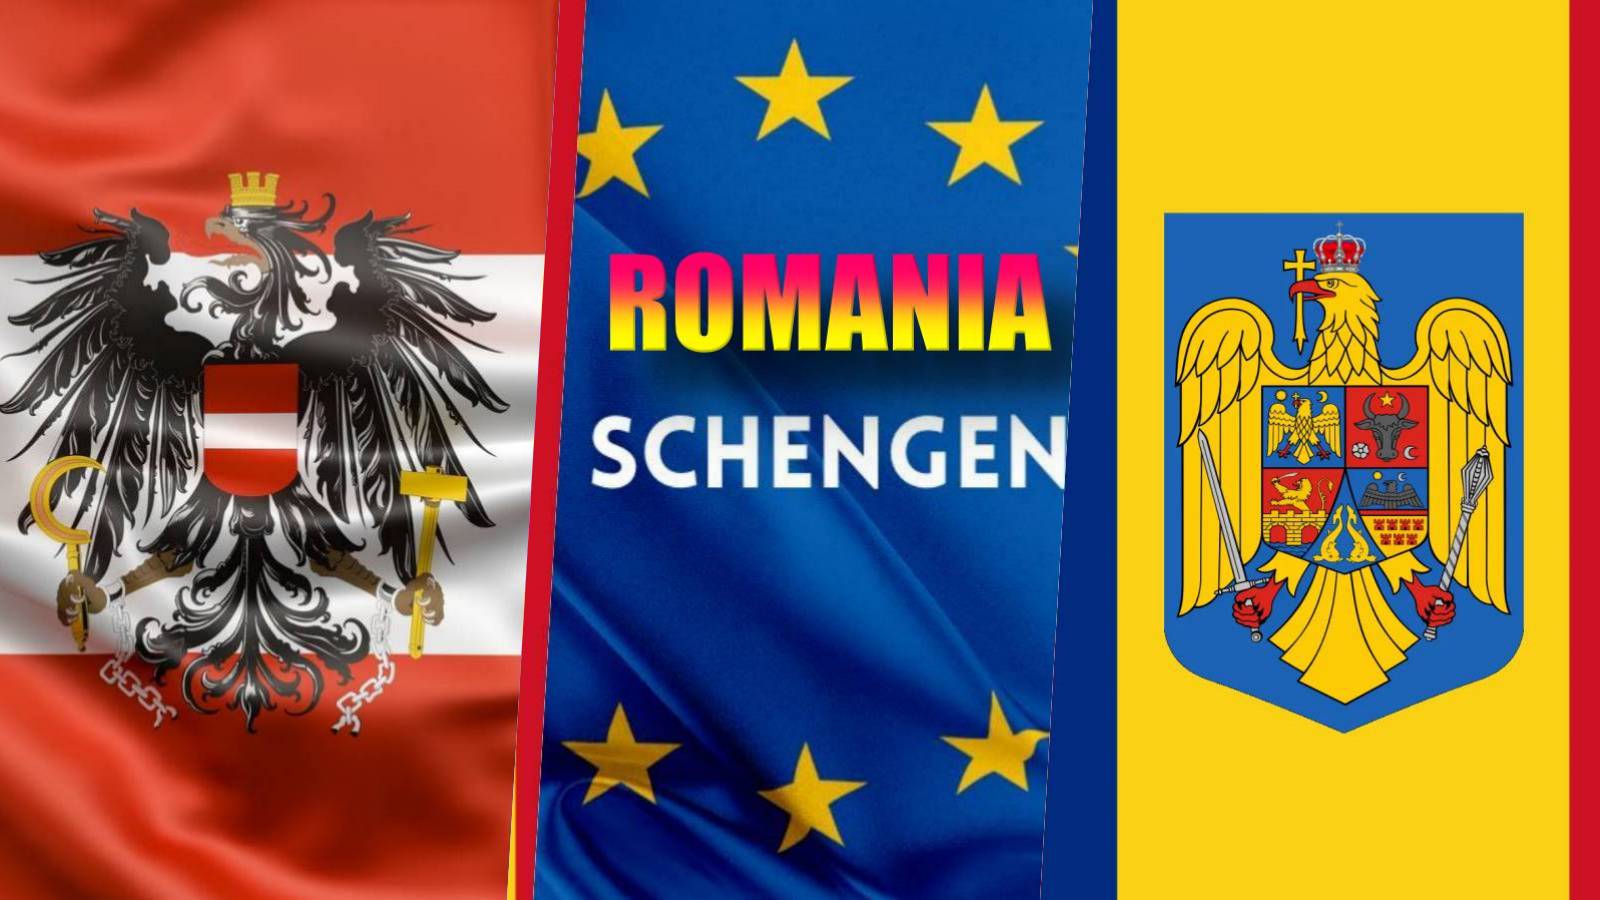 Austria Italia Masuri Oficiale ULTIM MOMENT Ajuta Permiterea Finalizarii Aderarii Romaniei Schengen